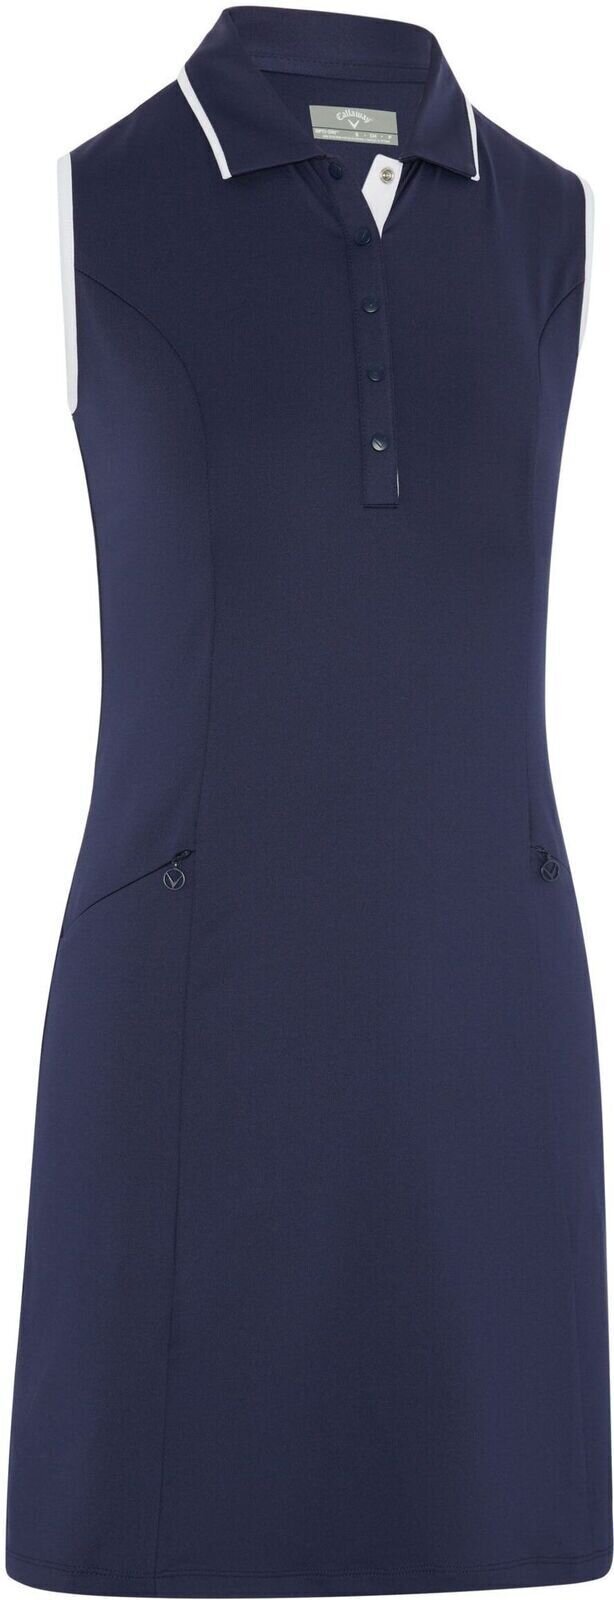 Callaway Womens Sleeveless Dress With Snap Placket Peacoat XL